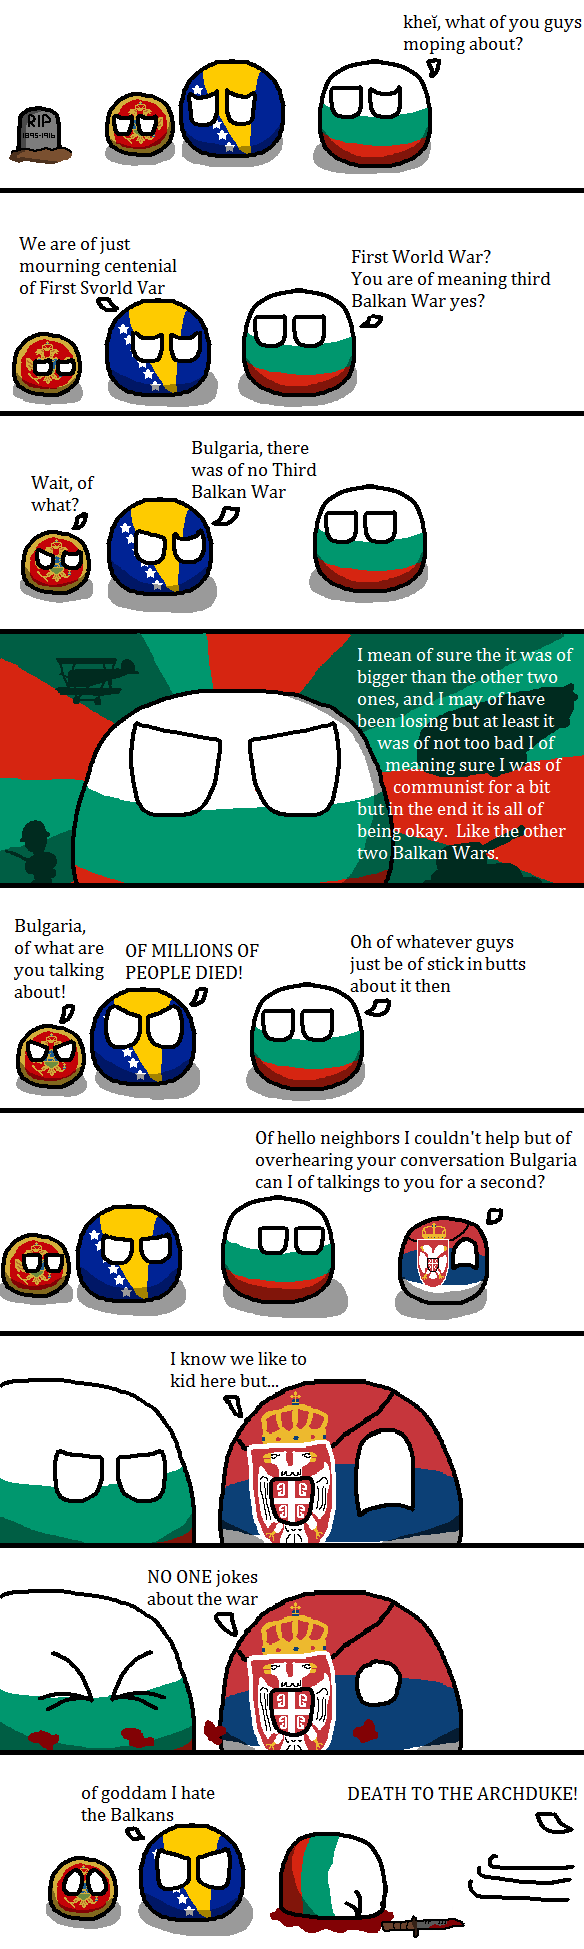 3rd Balkan War